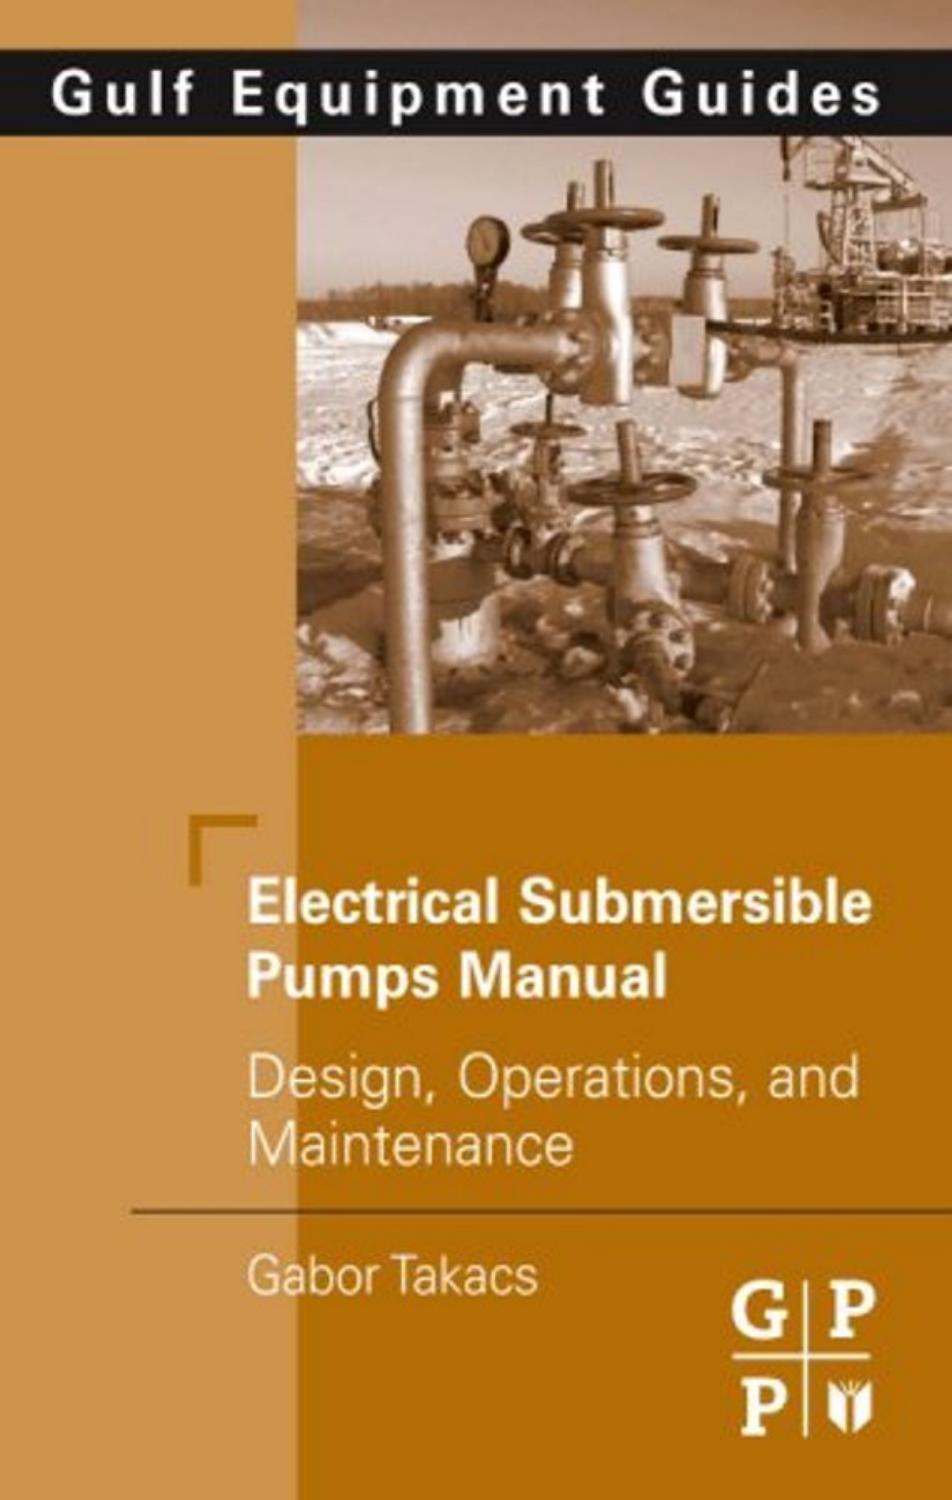 electrical submersible pumps manual gabor takacs pdf